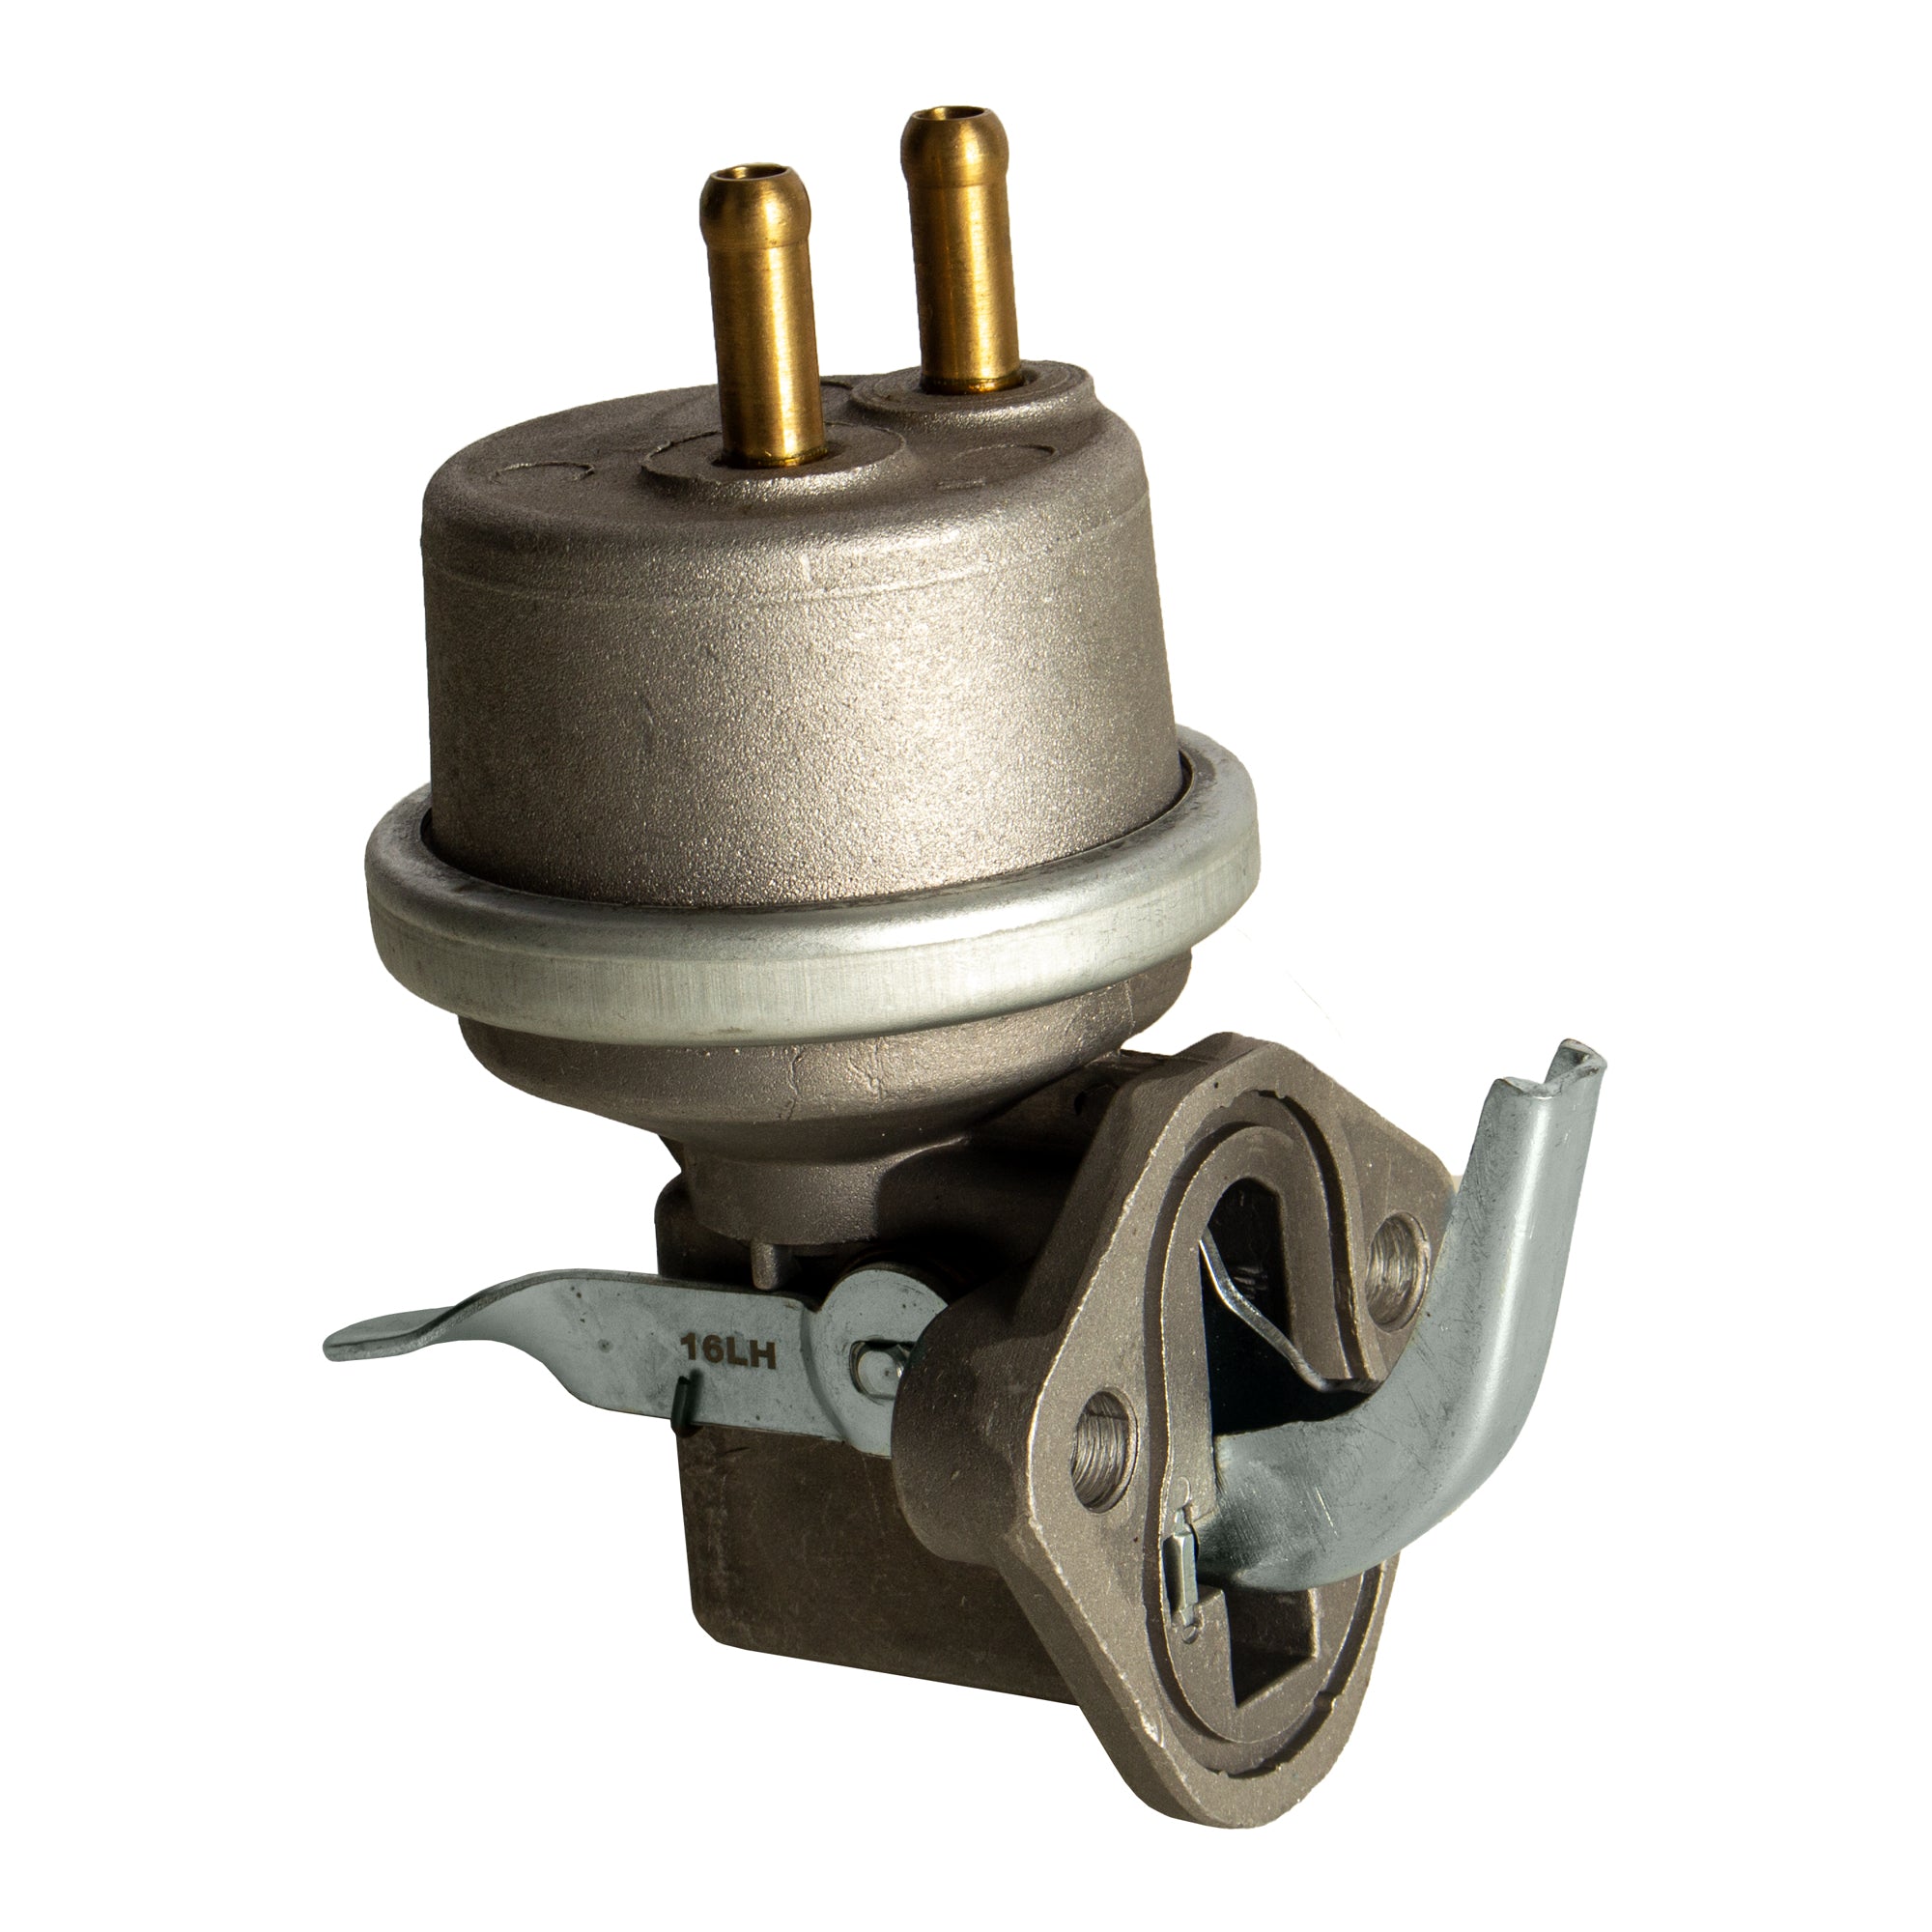 Fuel Pump Replacement for JOHN DEERE 4039 TF CD 4039 T 6068 HZ001 RE55390